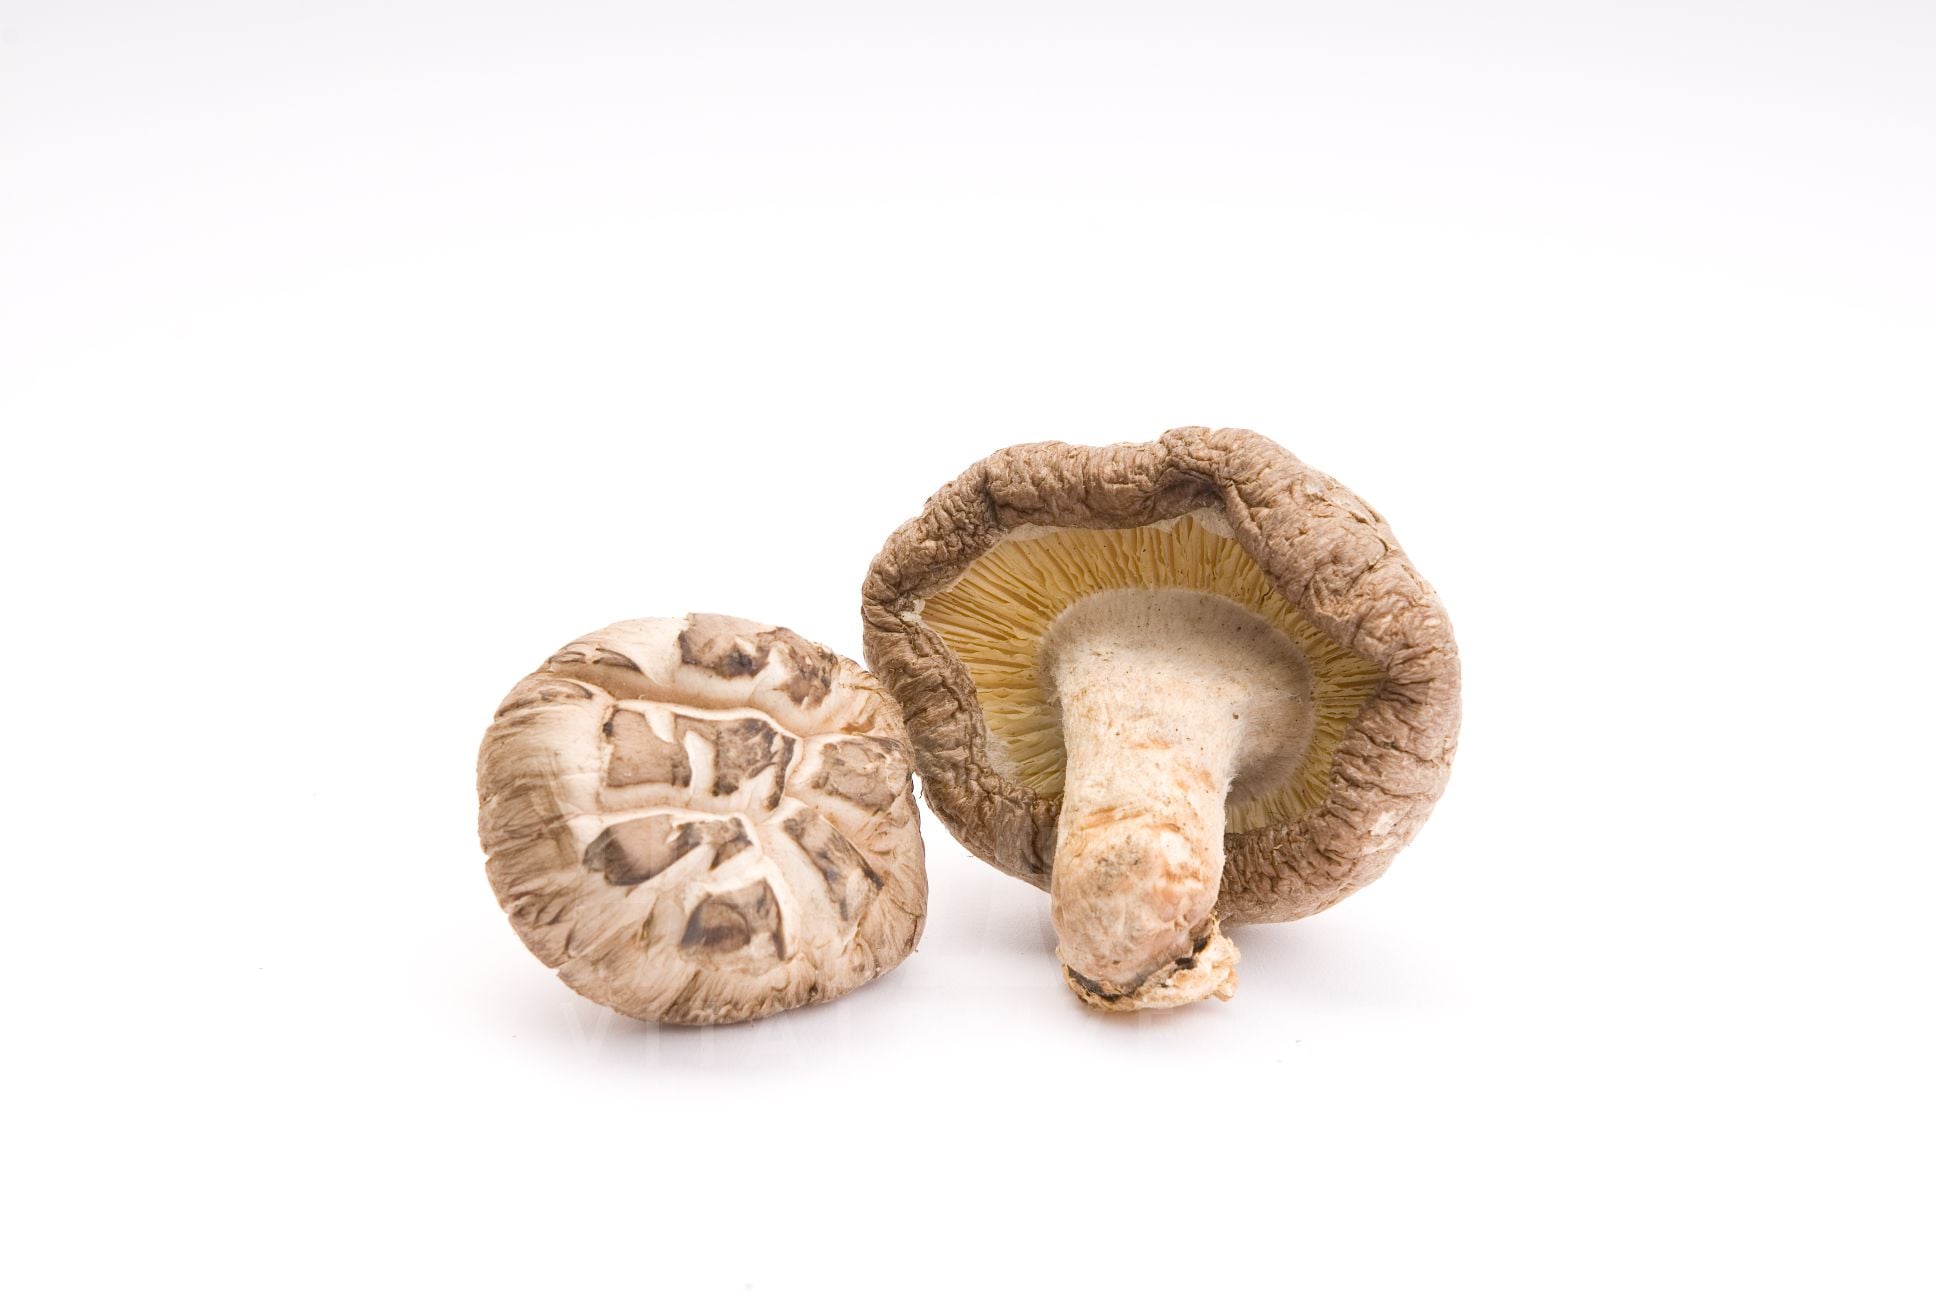 Shiitake - MycoMedica - chinese vital mushrooms